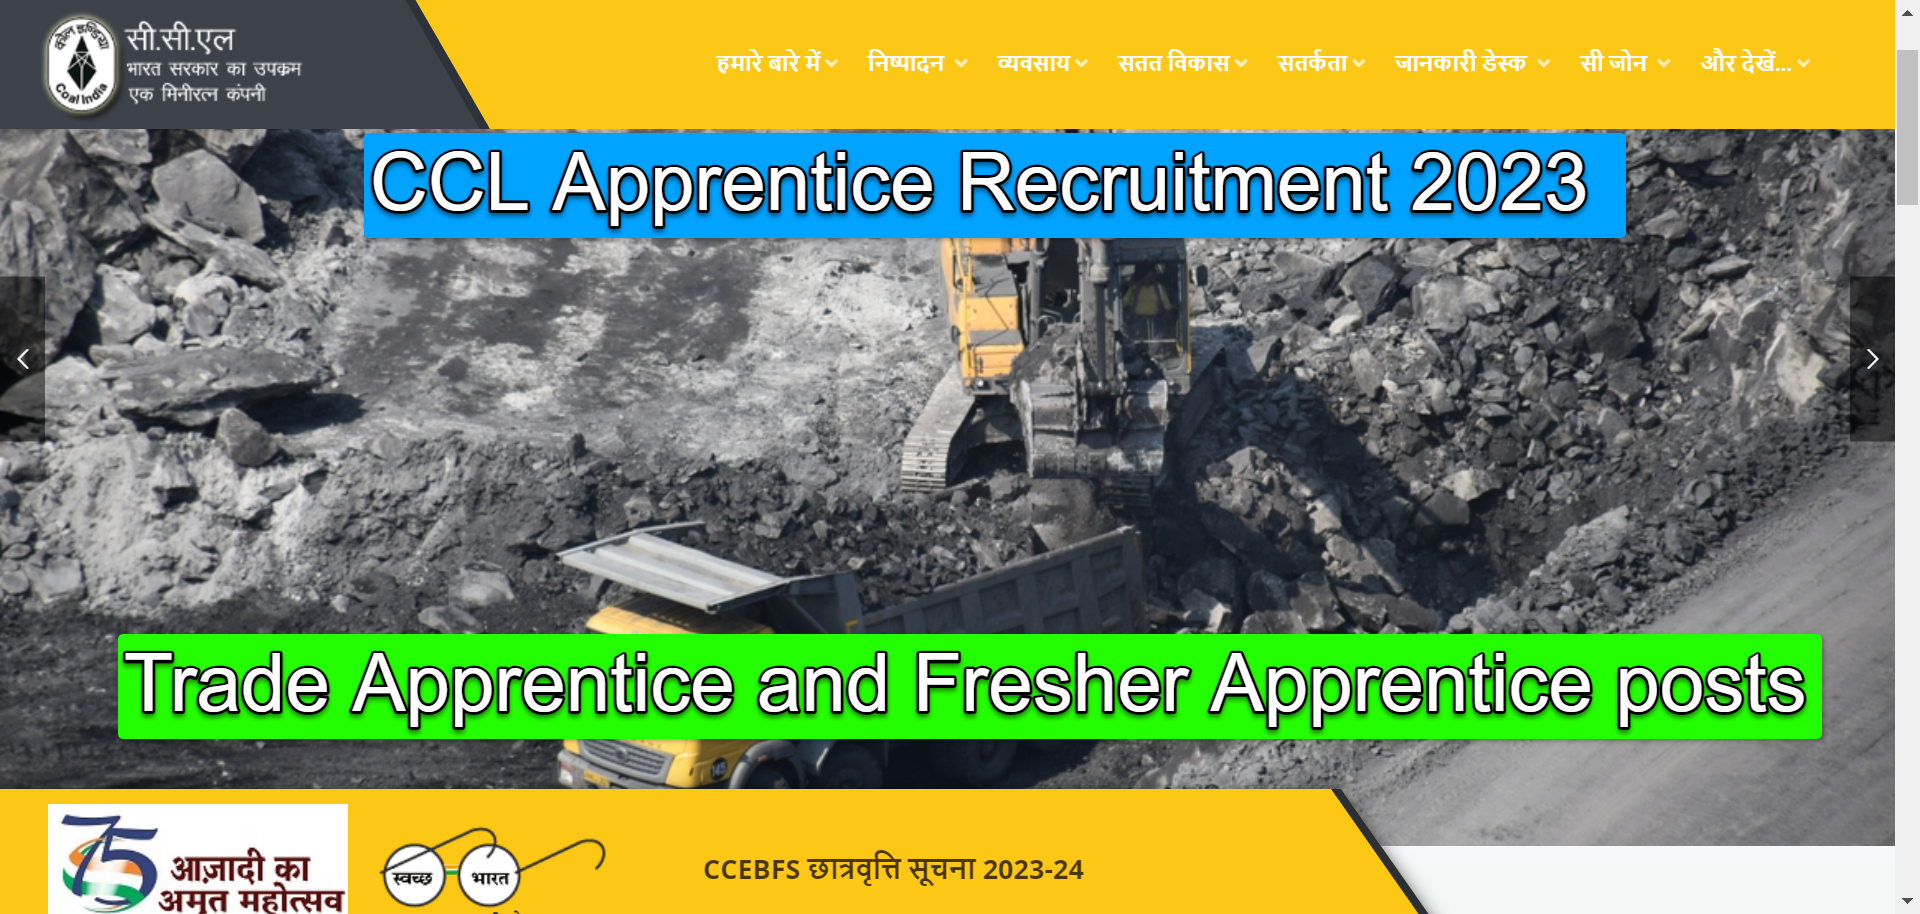 CCL Apprentice Recruitment 2023 : Notification Released